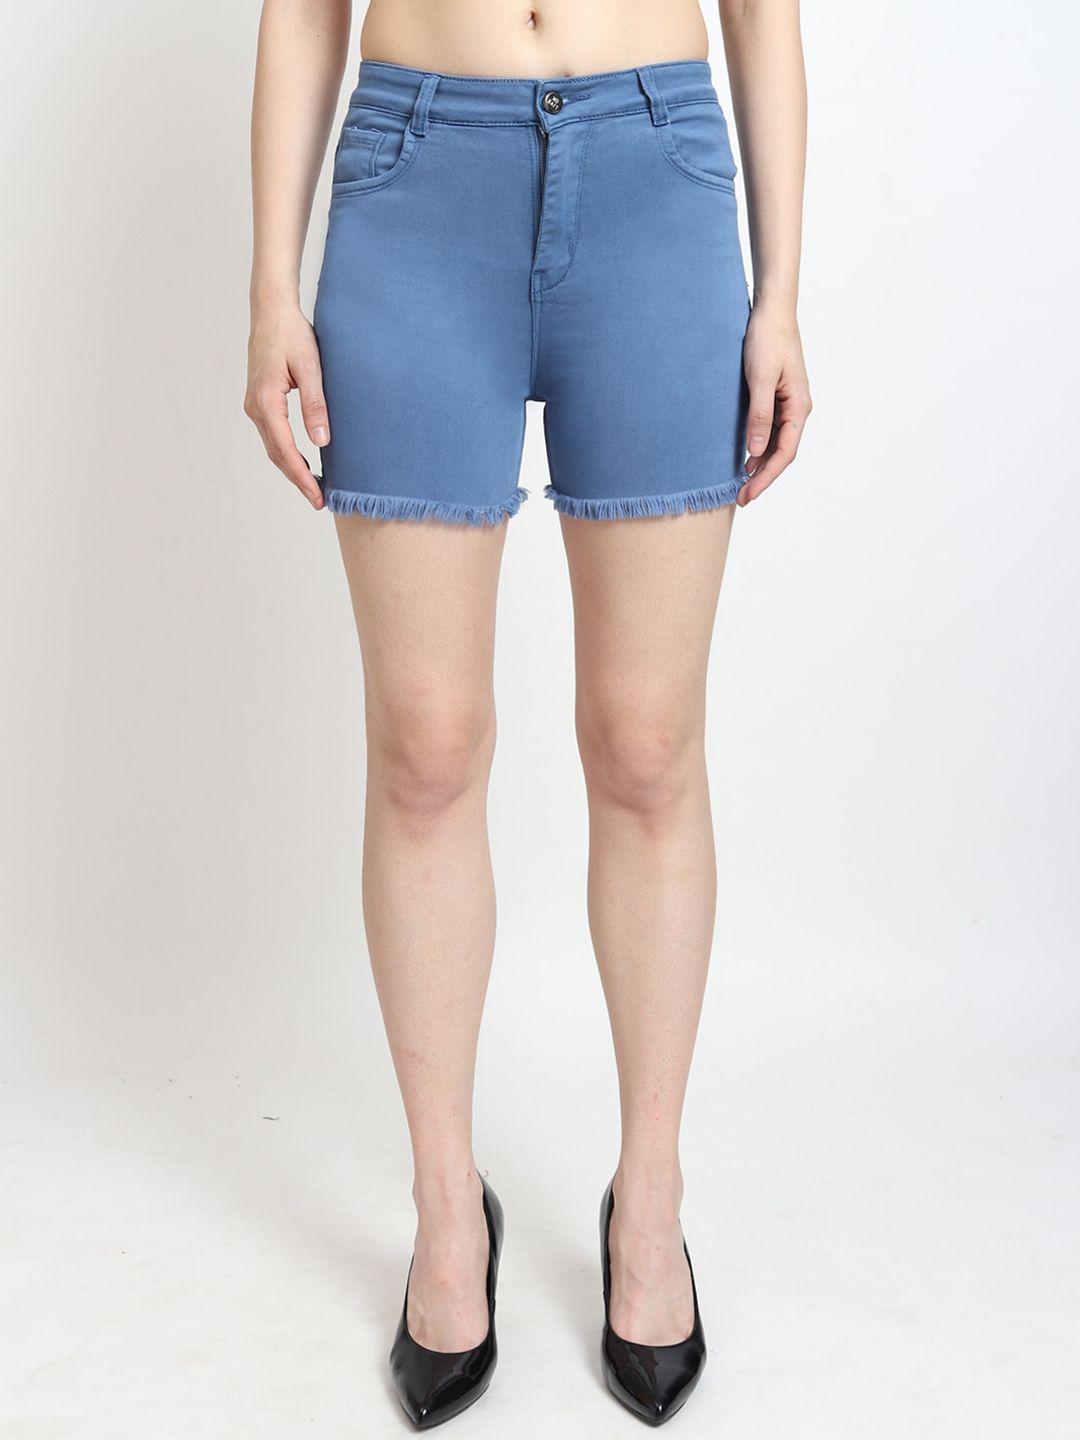 LIVE OK Women Skinny Fit High-Rise Stretchable Cotton Denim Shorts